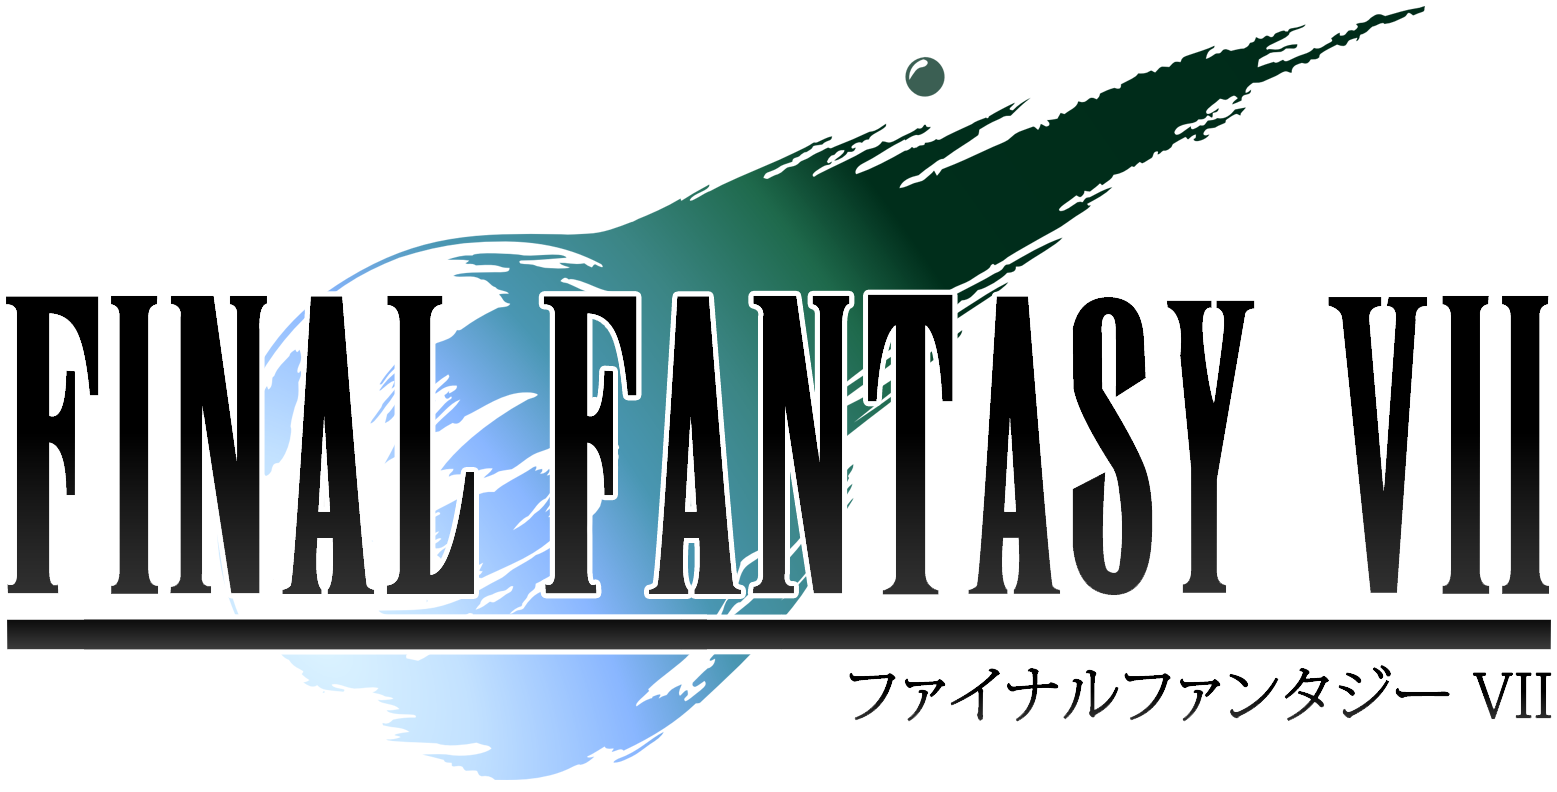 Final Fantasy VII Logo PNG Transparent Picture